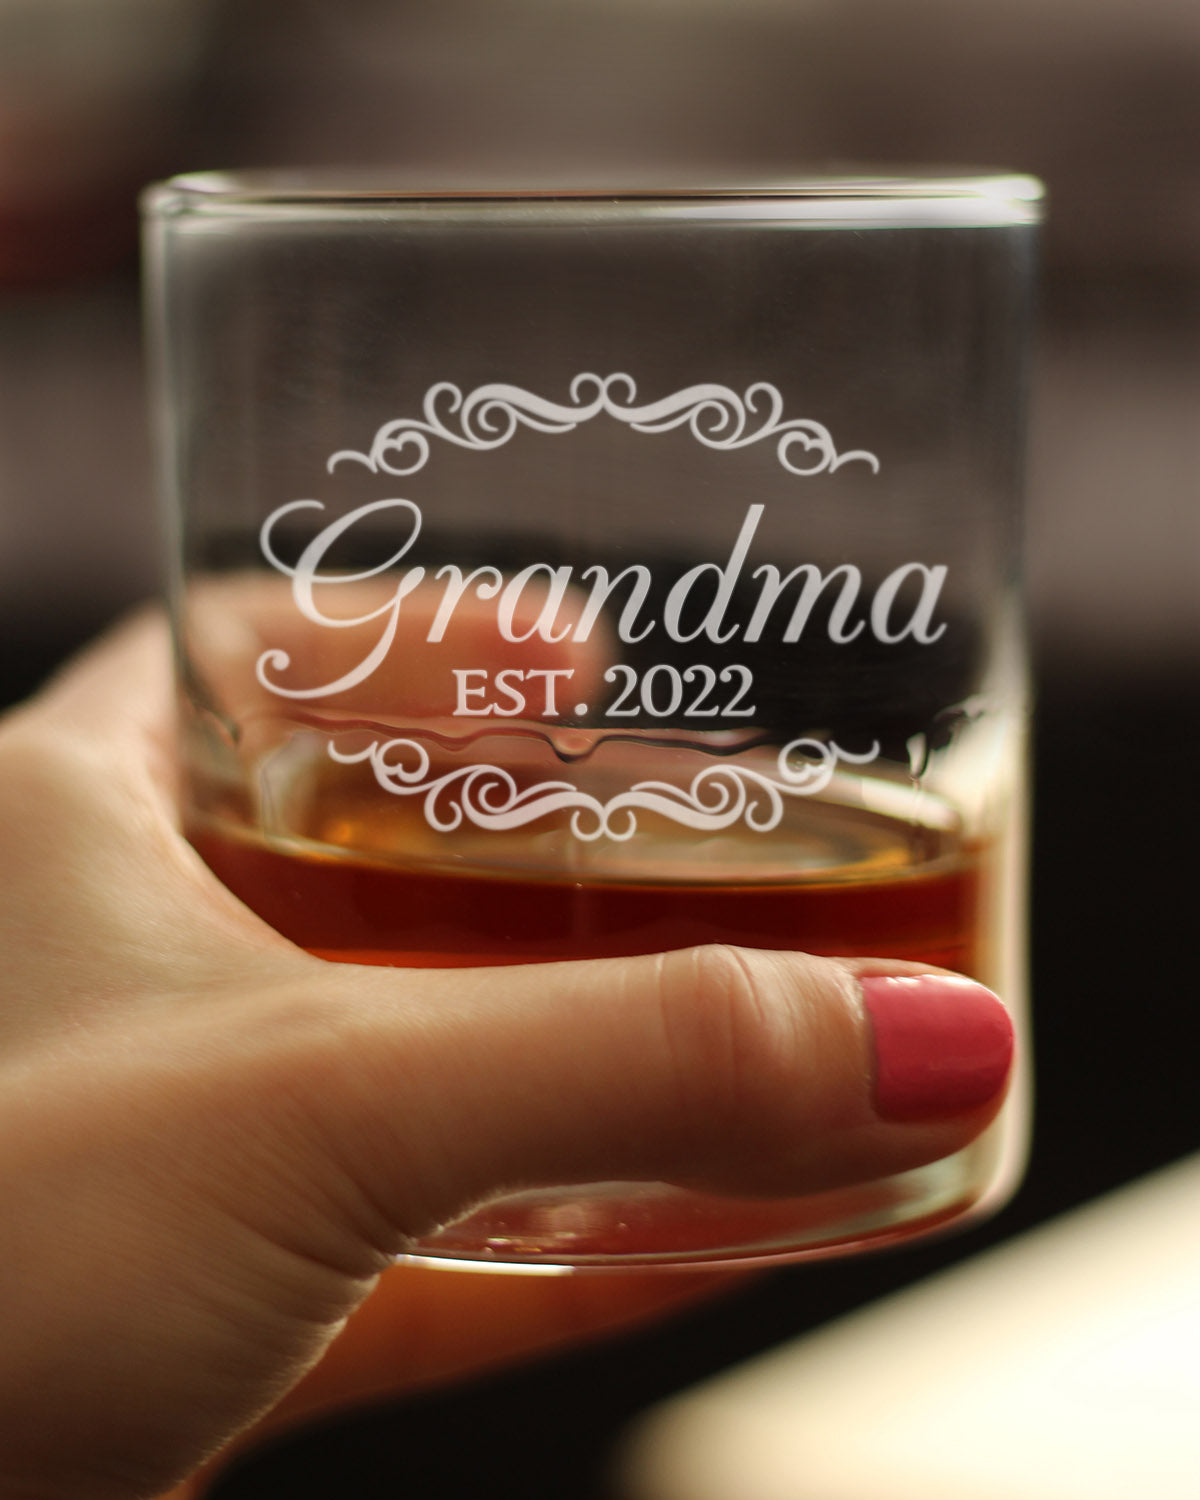 Grandma Est 2022 - New Grandmother Whiskey Rocks Glass Gift for First Time Grandparents - Decorative 10.25 Oz Glasses